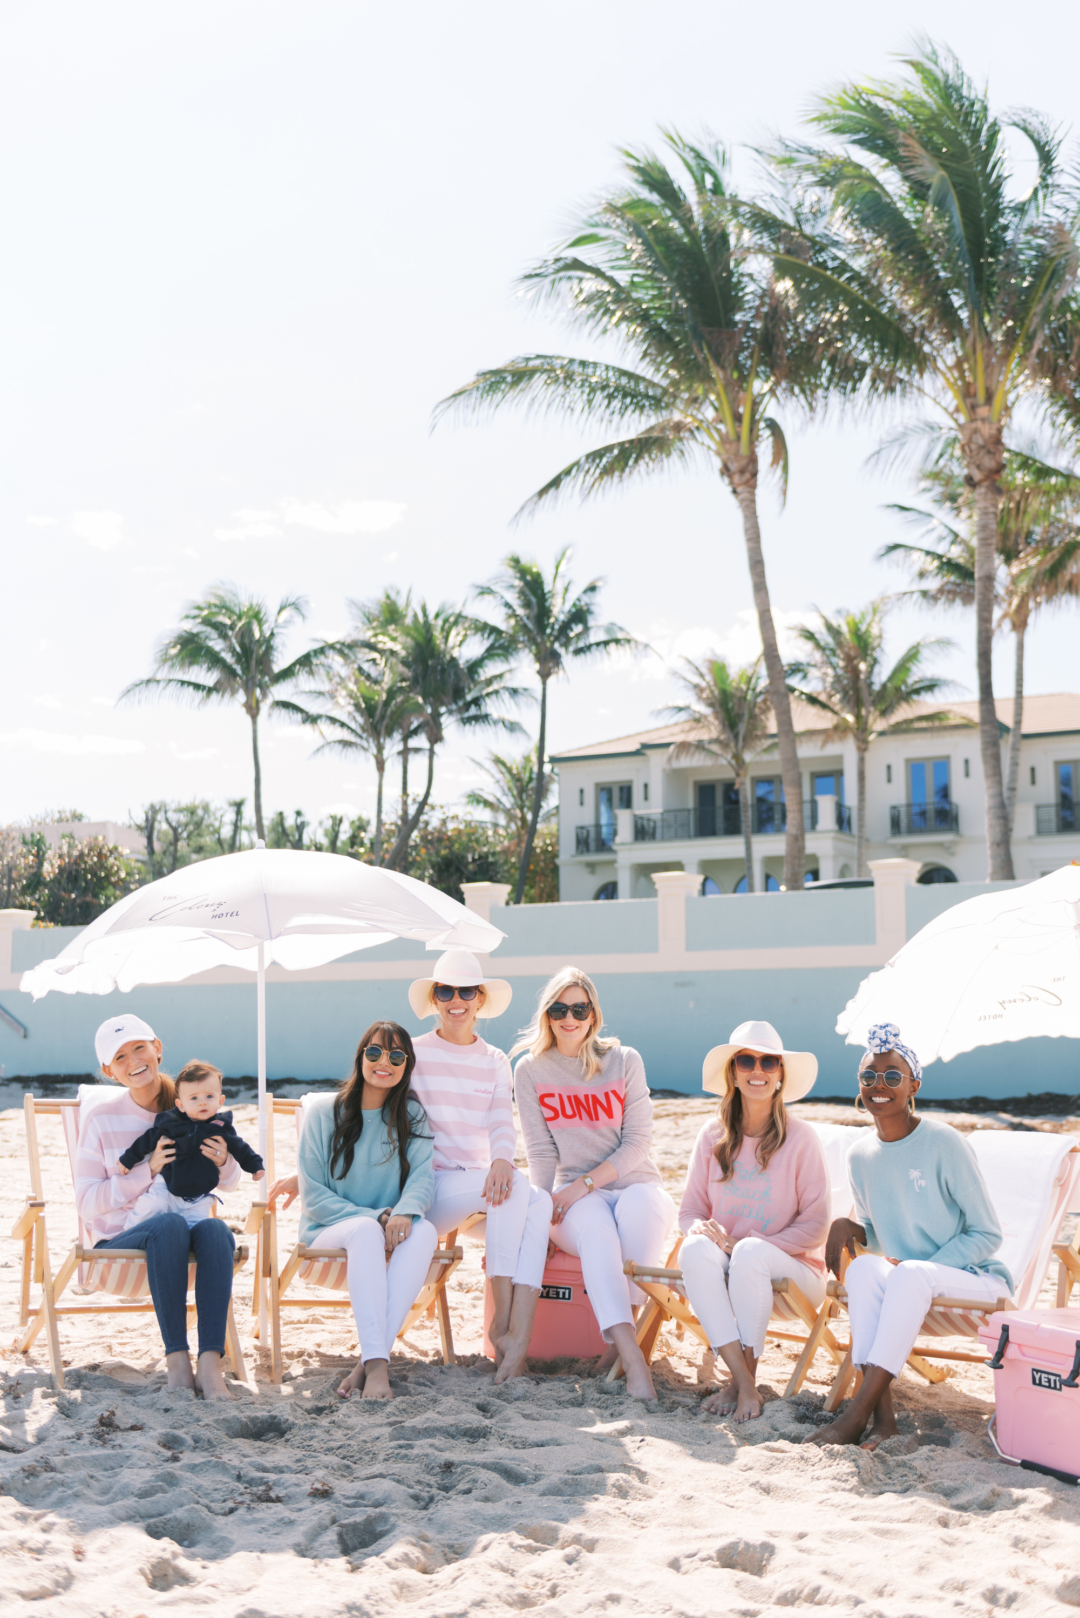 Fashion: vineyard vines x palm beach lately's influencer trip in palm beach